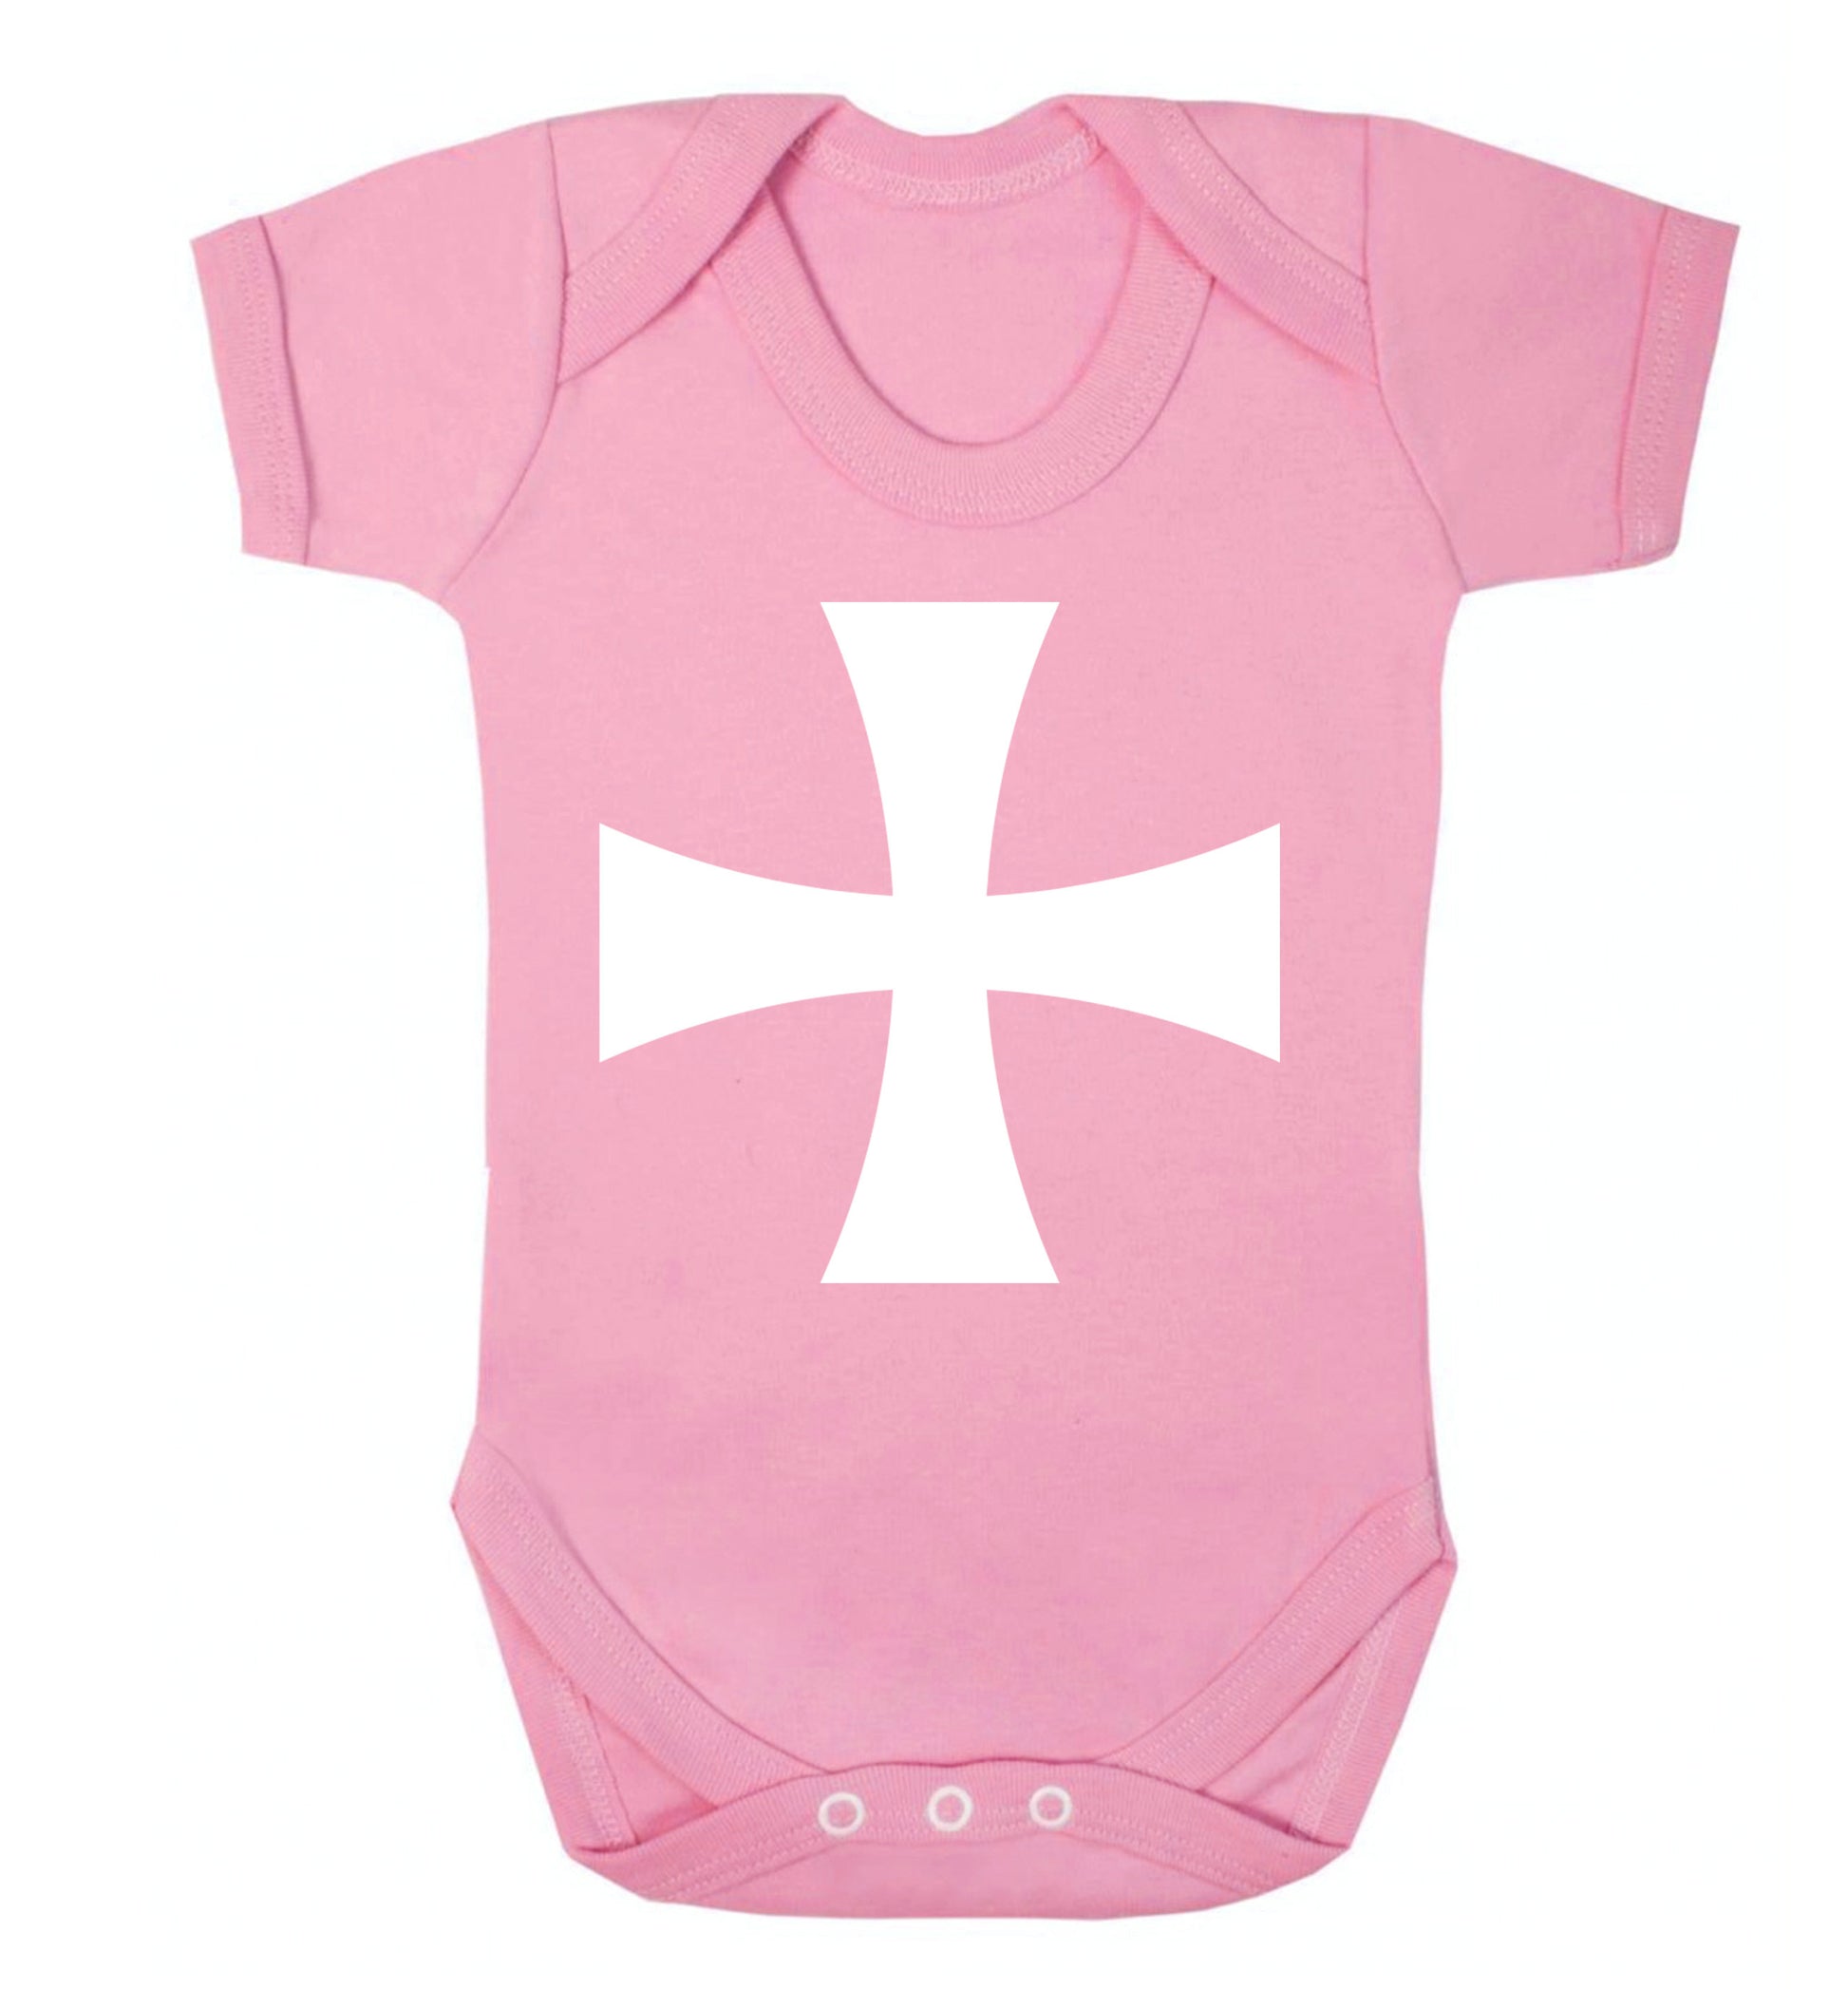 Knights Templar cross Baby Vest pale pink 18-24 months